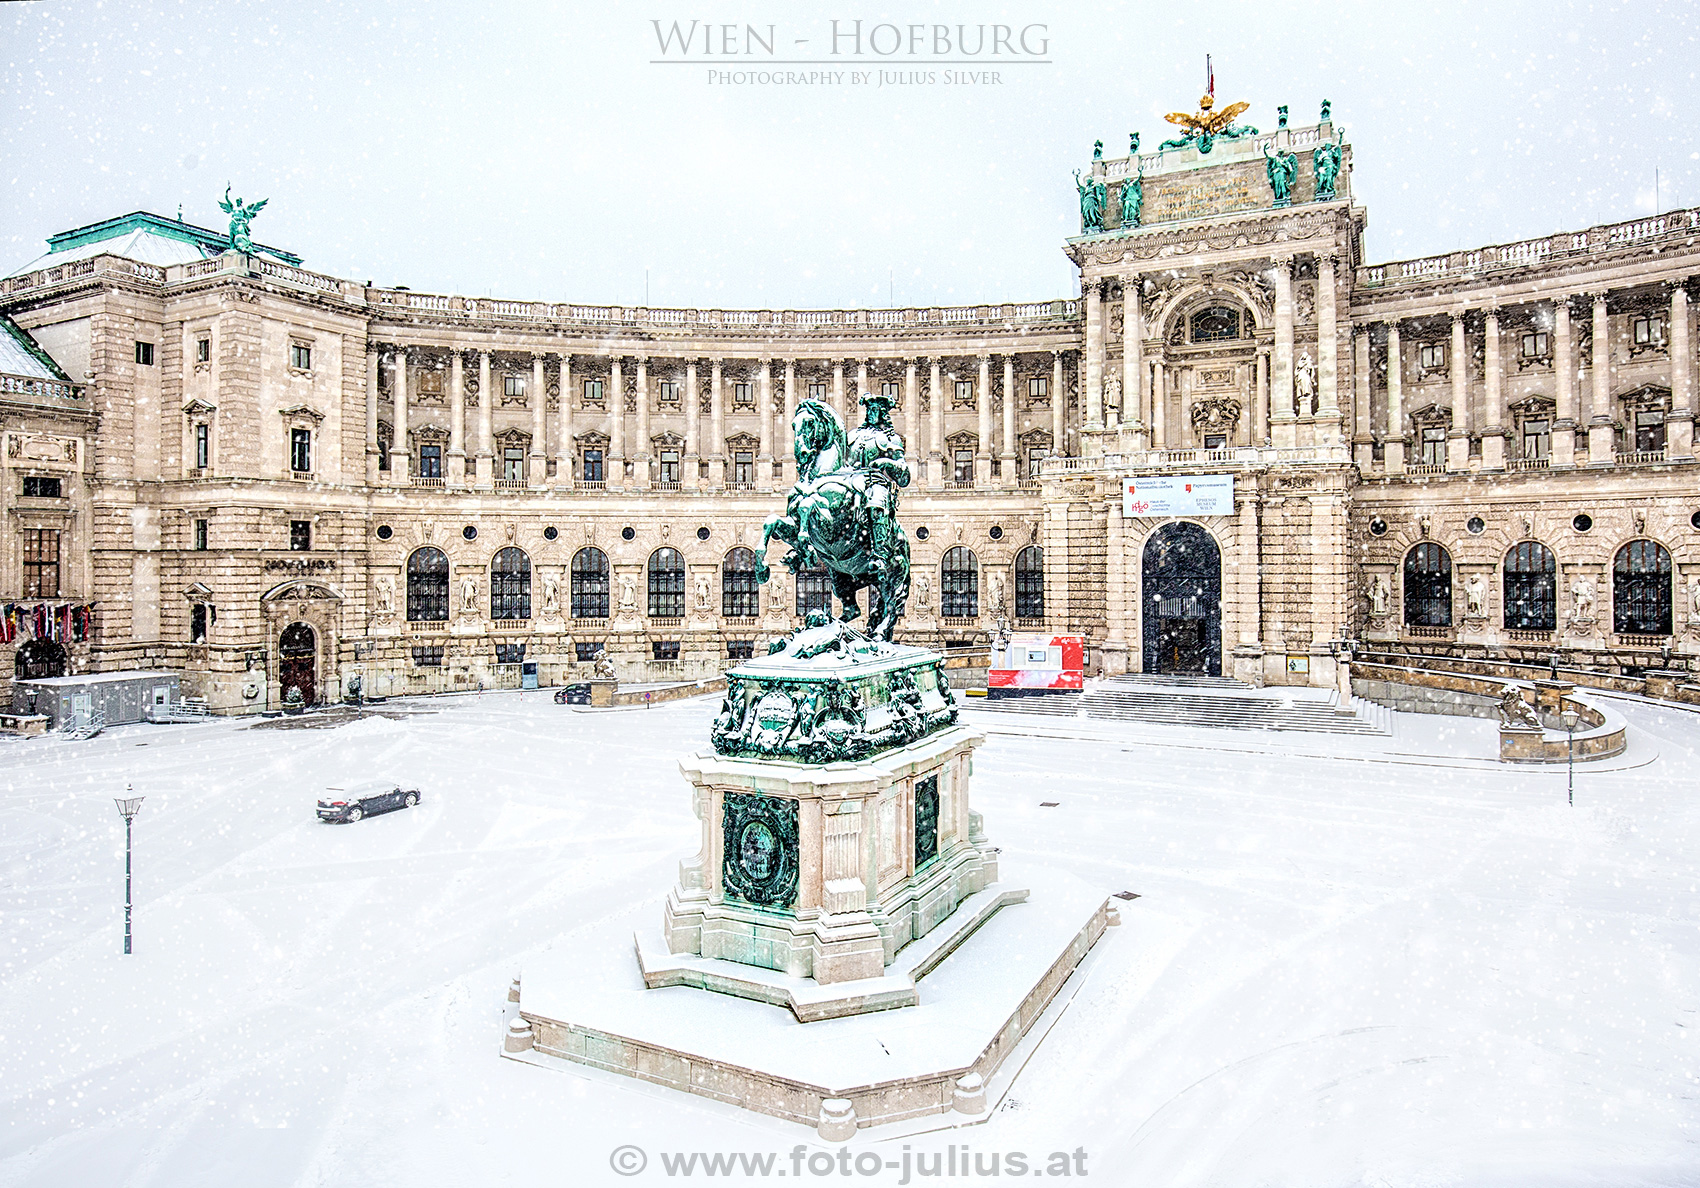 W6949a_Wen_Hofburg_Winter.jpg, 1007kB